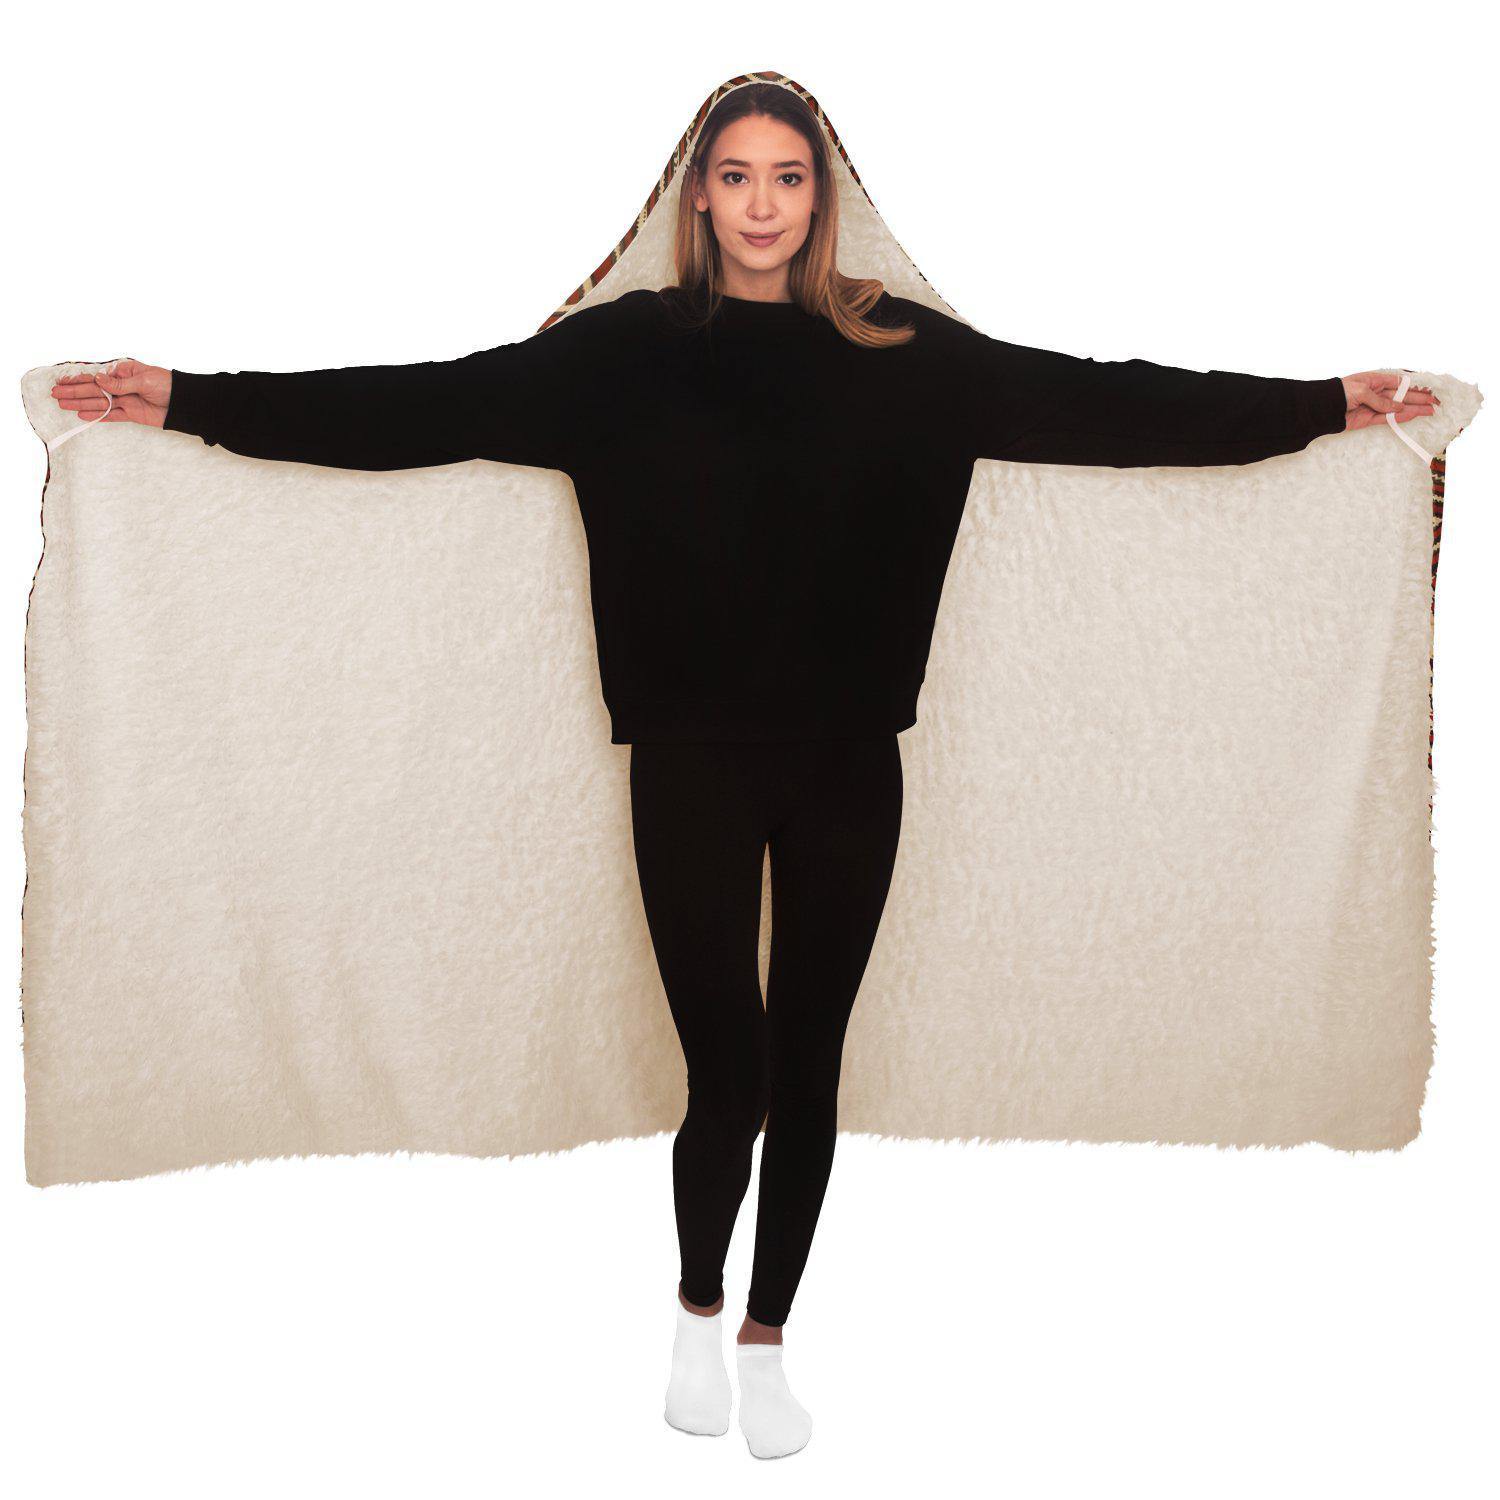 Hooded Blanket - AOP Hooded Blanket, Baruga-Culture Inspired Tapa (Bark Cloth) Design